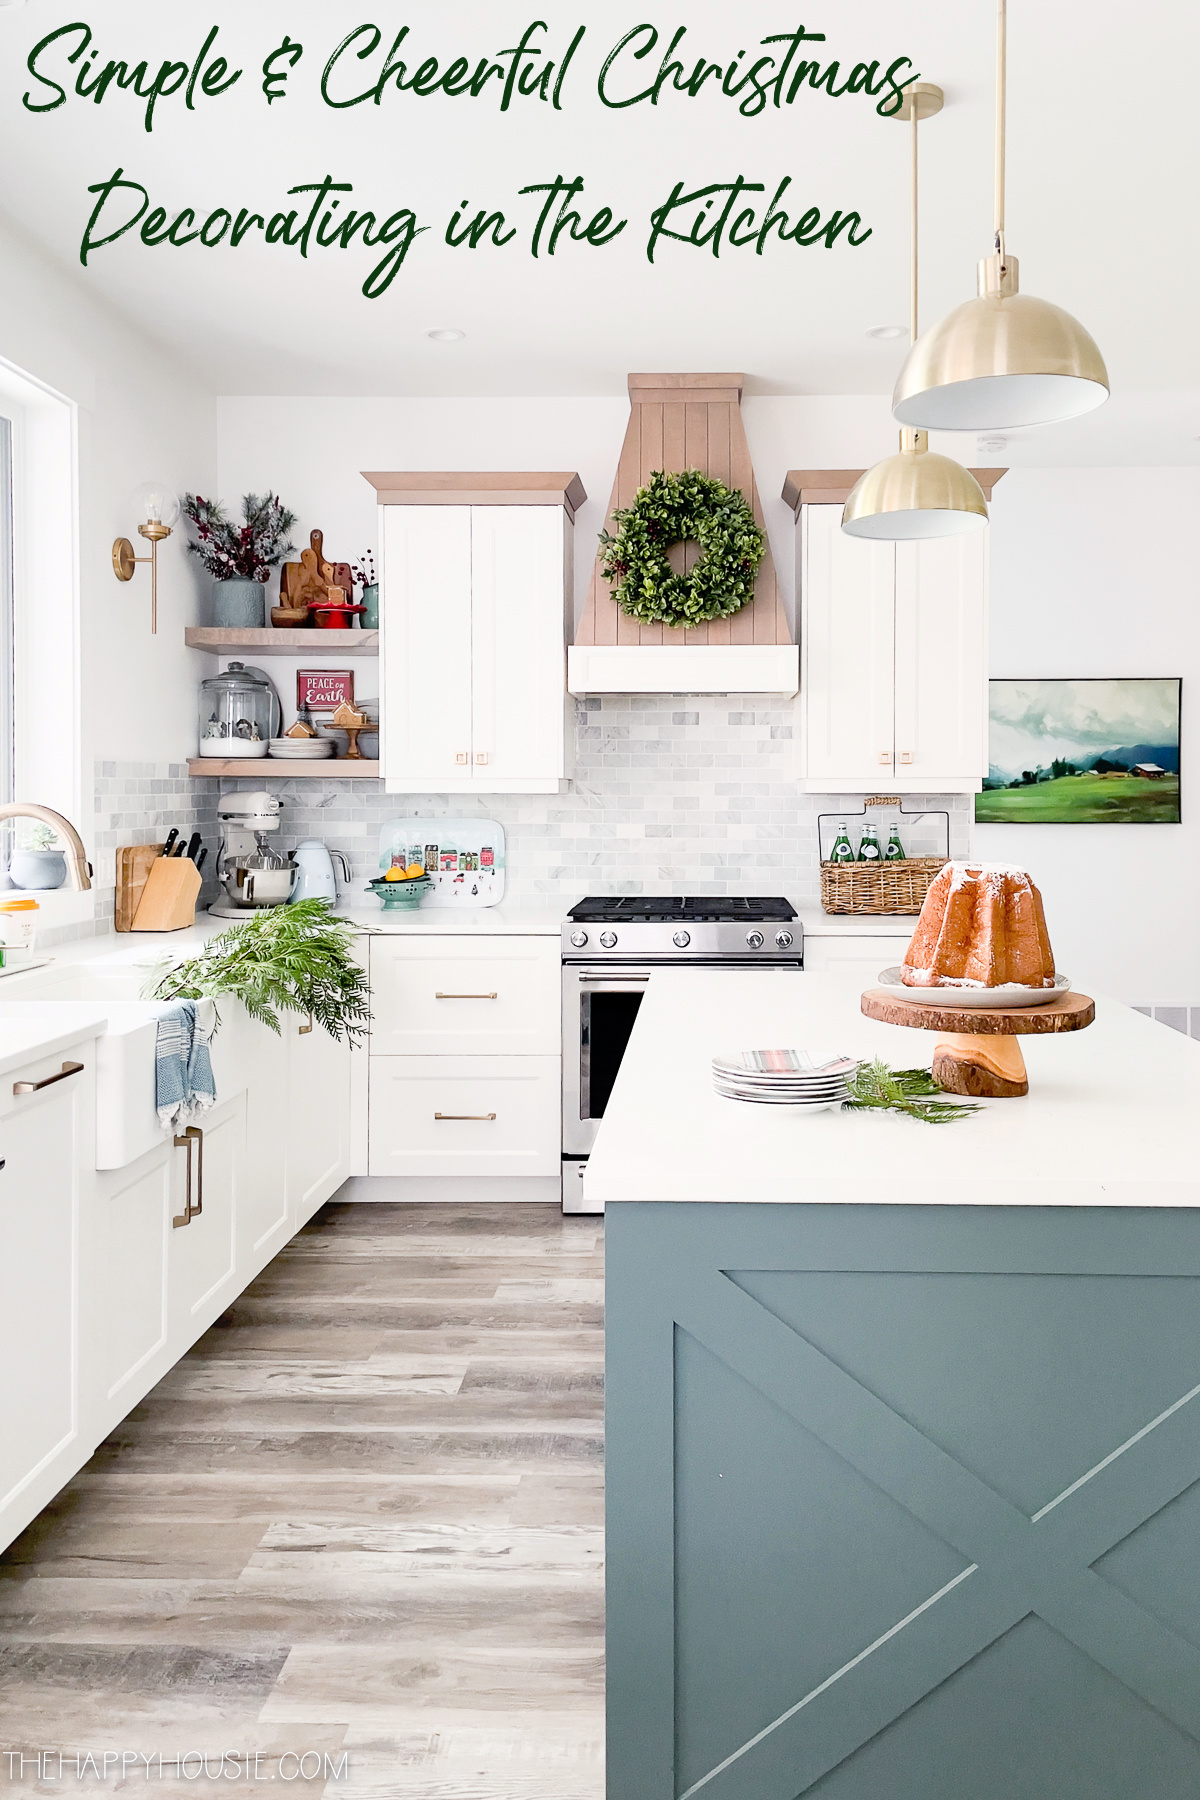 Cheerful & Simple Christmas Kitchen Decor Ideas | The Happy Housie